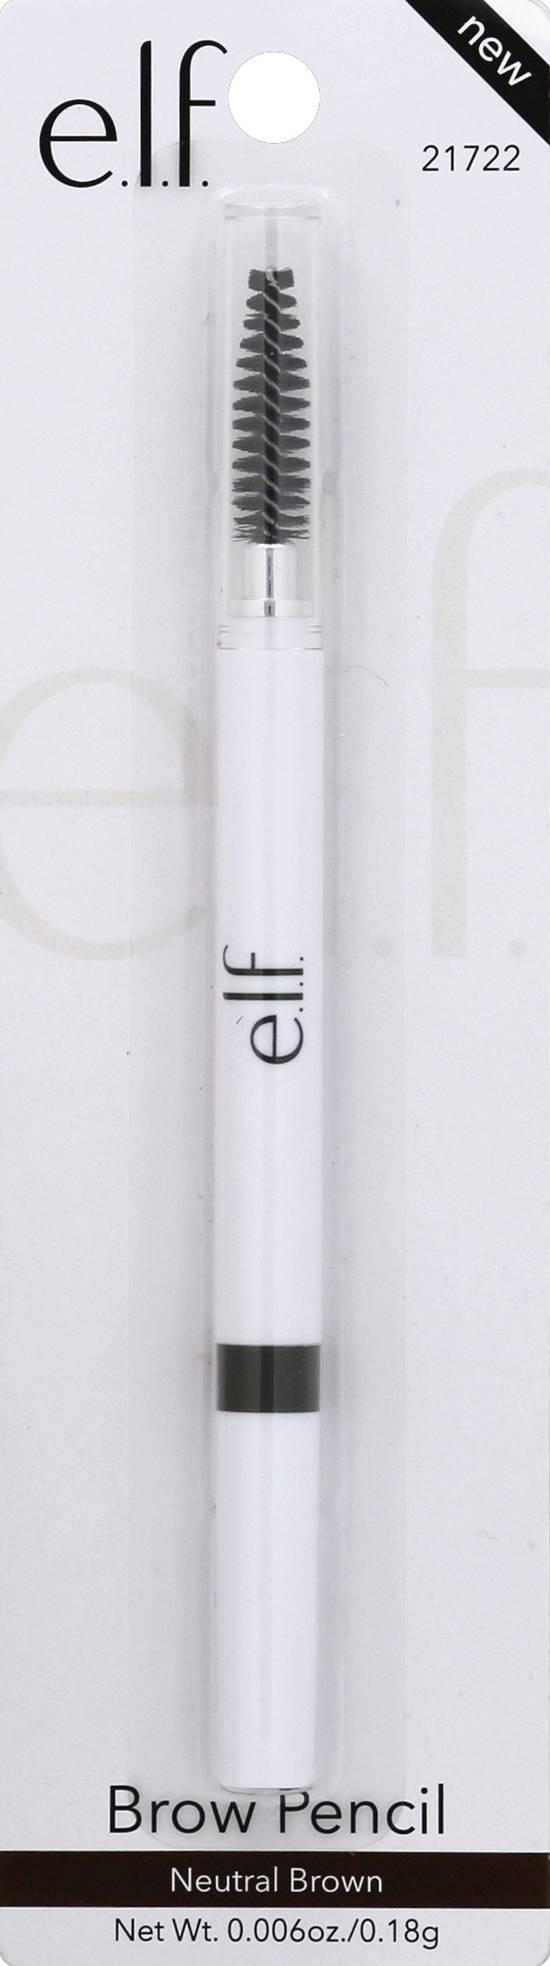 E.l.f. Brow Pencil (neutral brown)